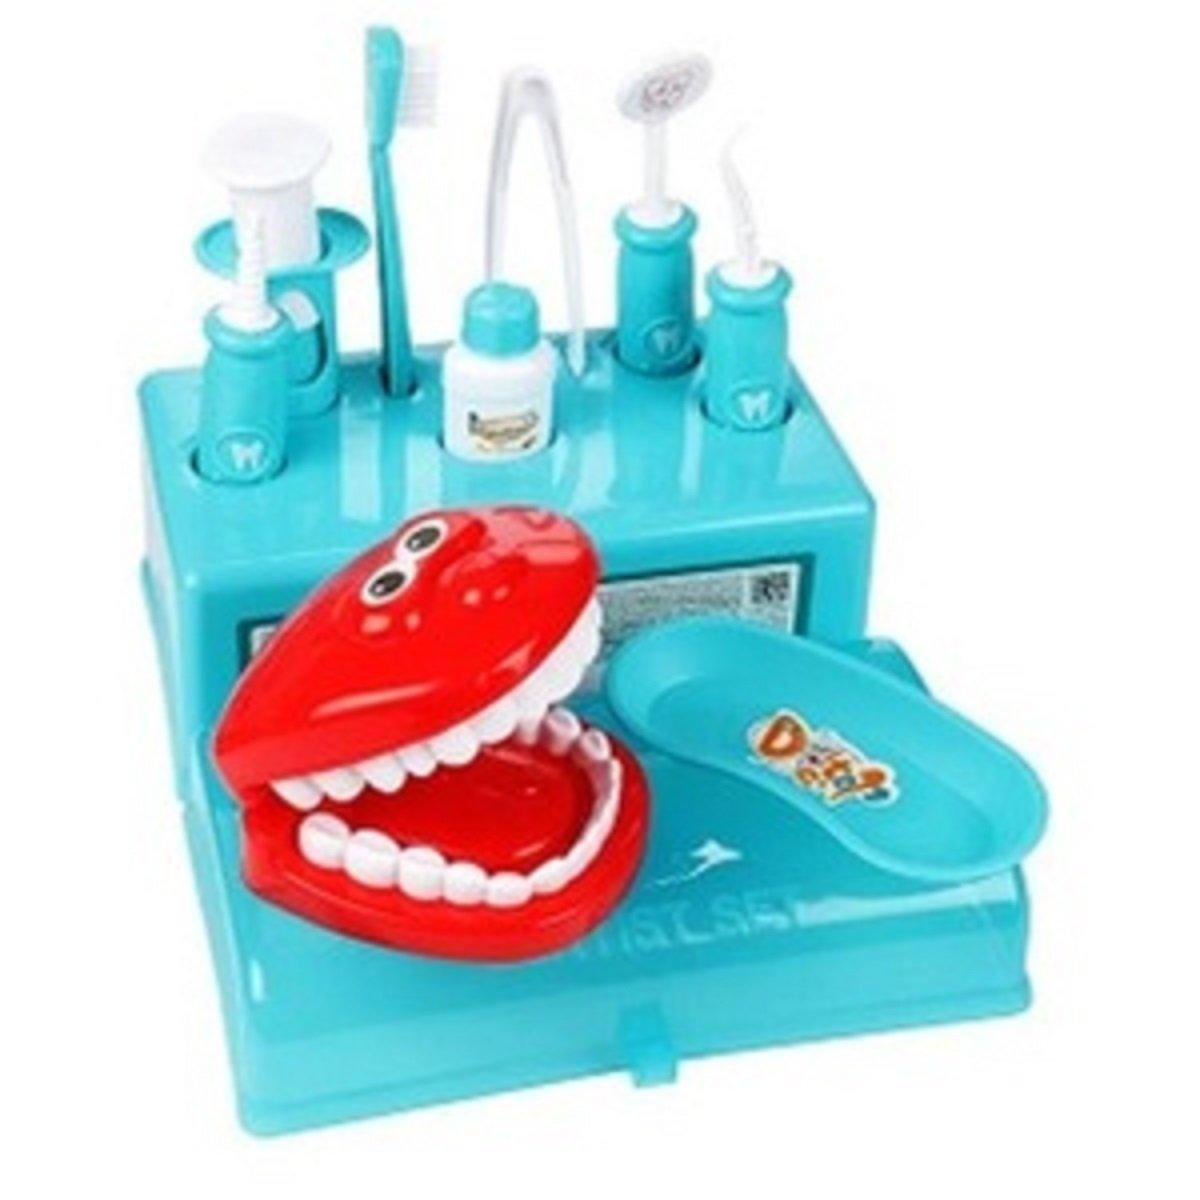 Dental Kit Play Set - Medical Dentist Role Pretend Play